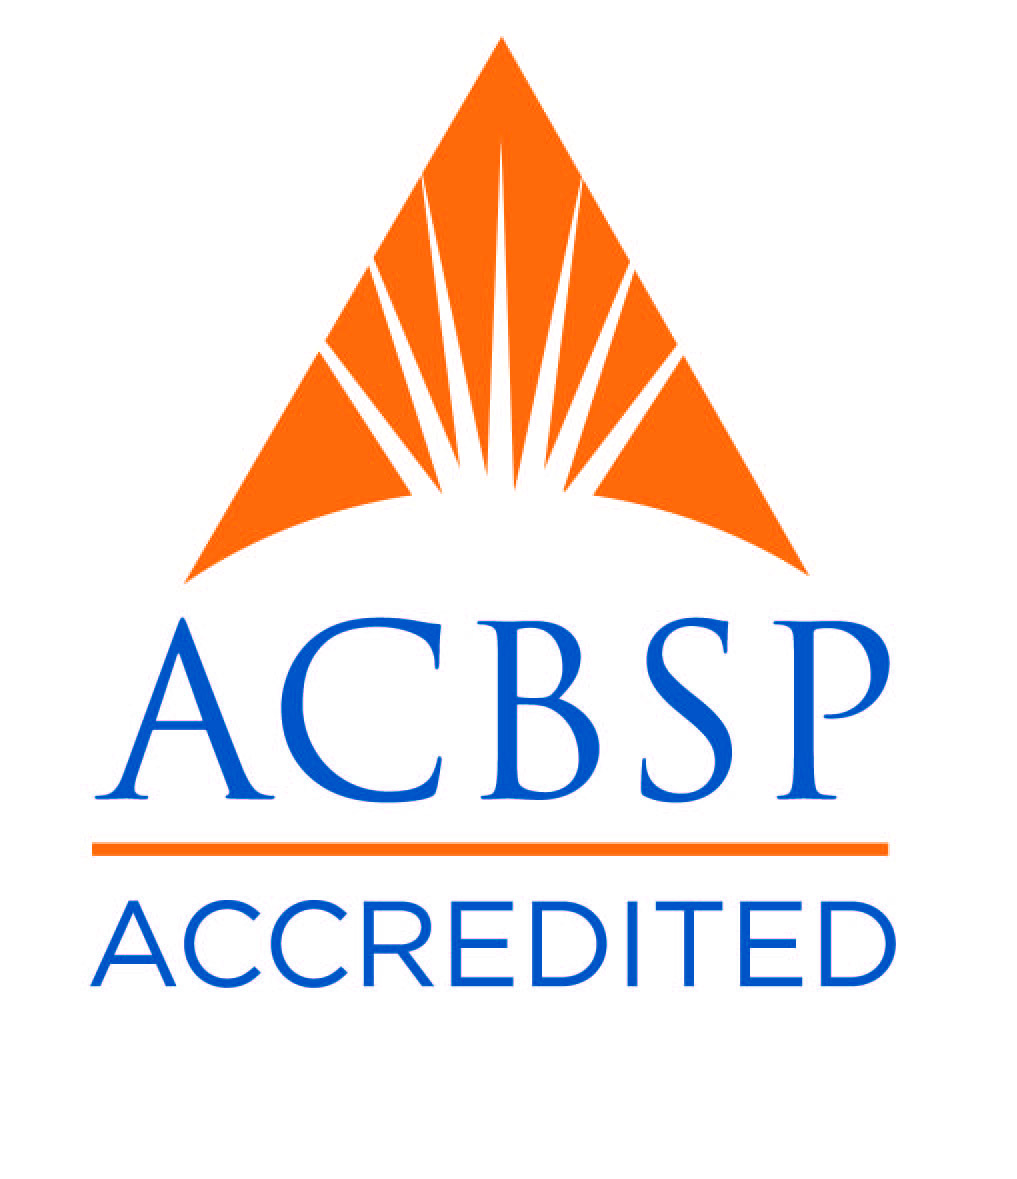 acbsp_accredited